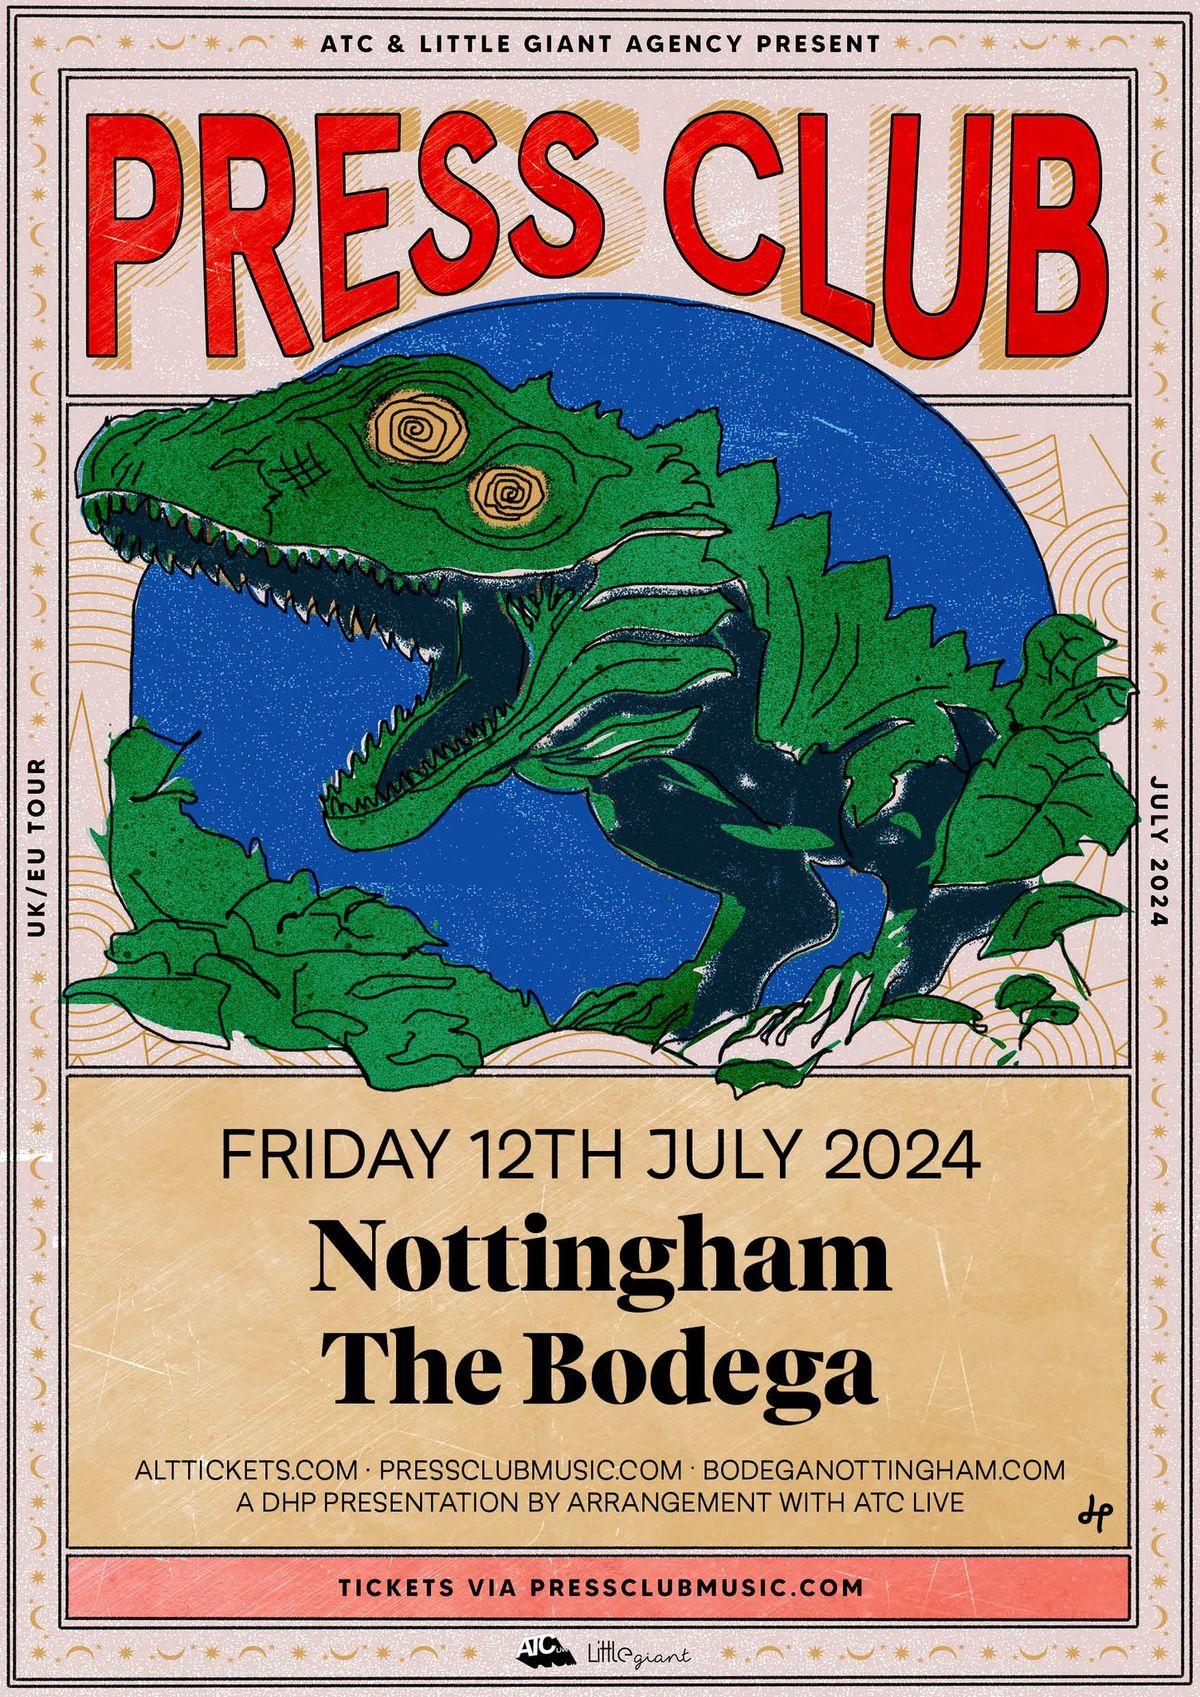 Press Club live at The Bodega